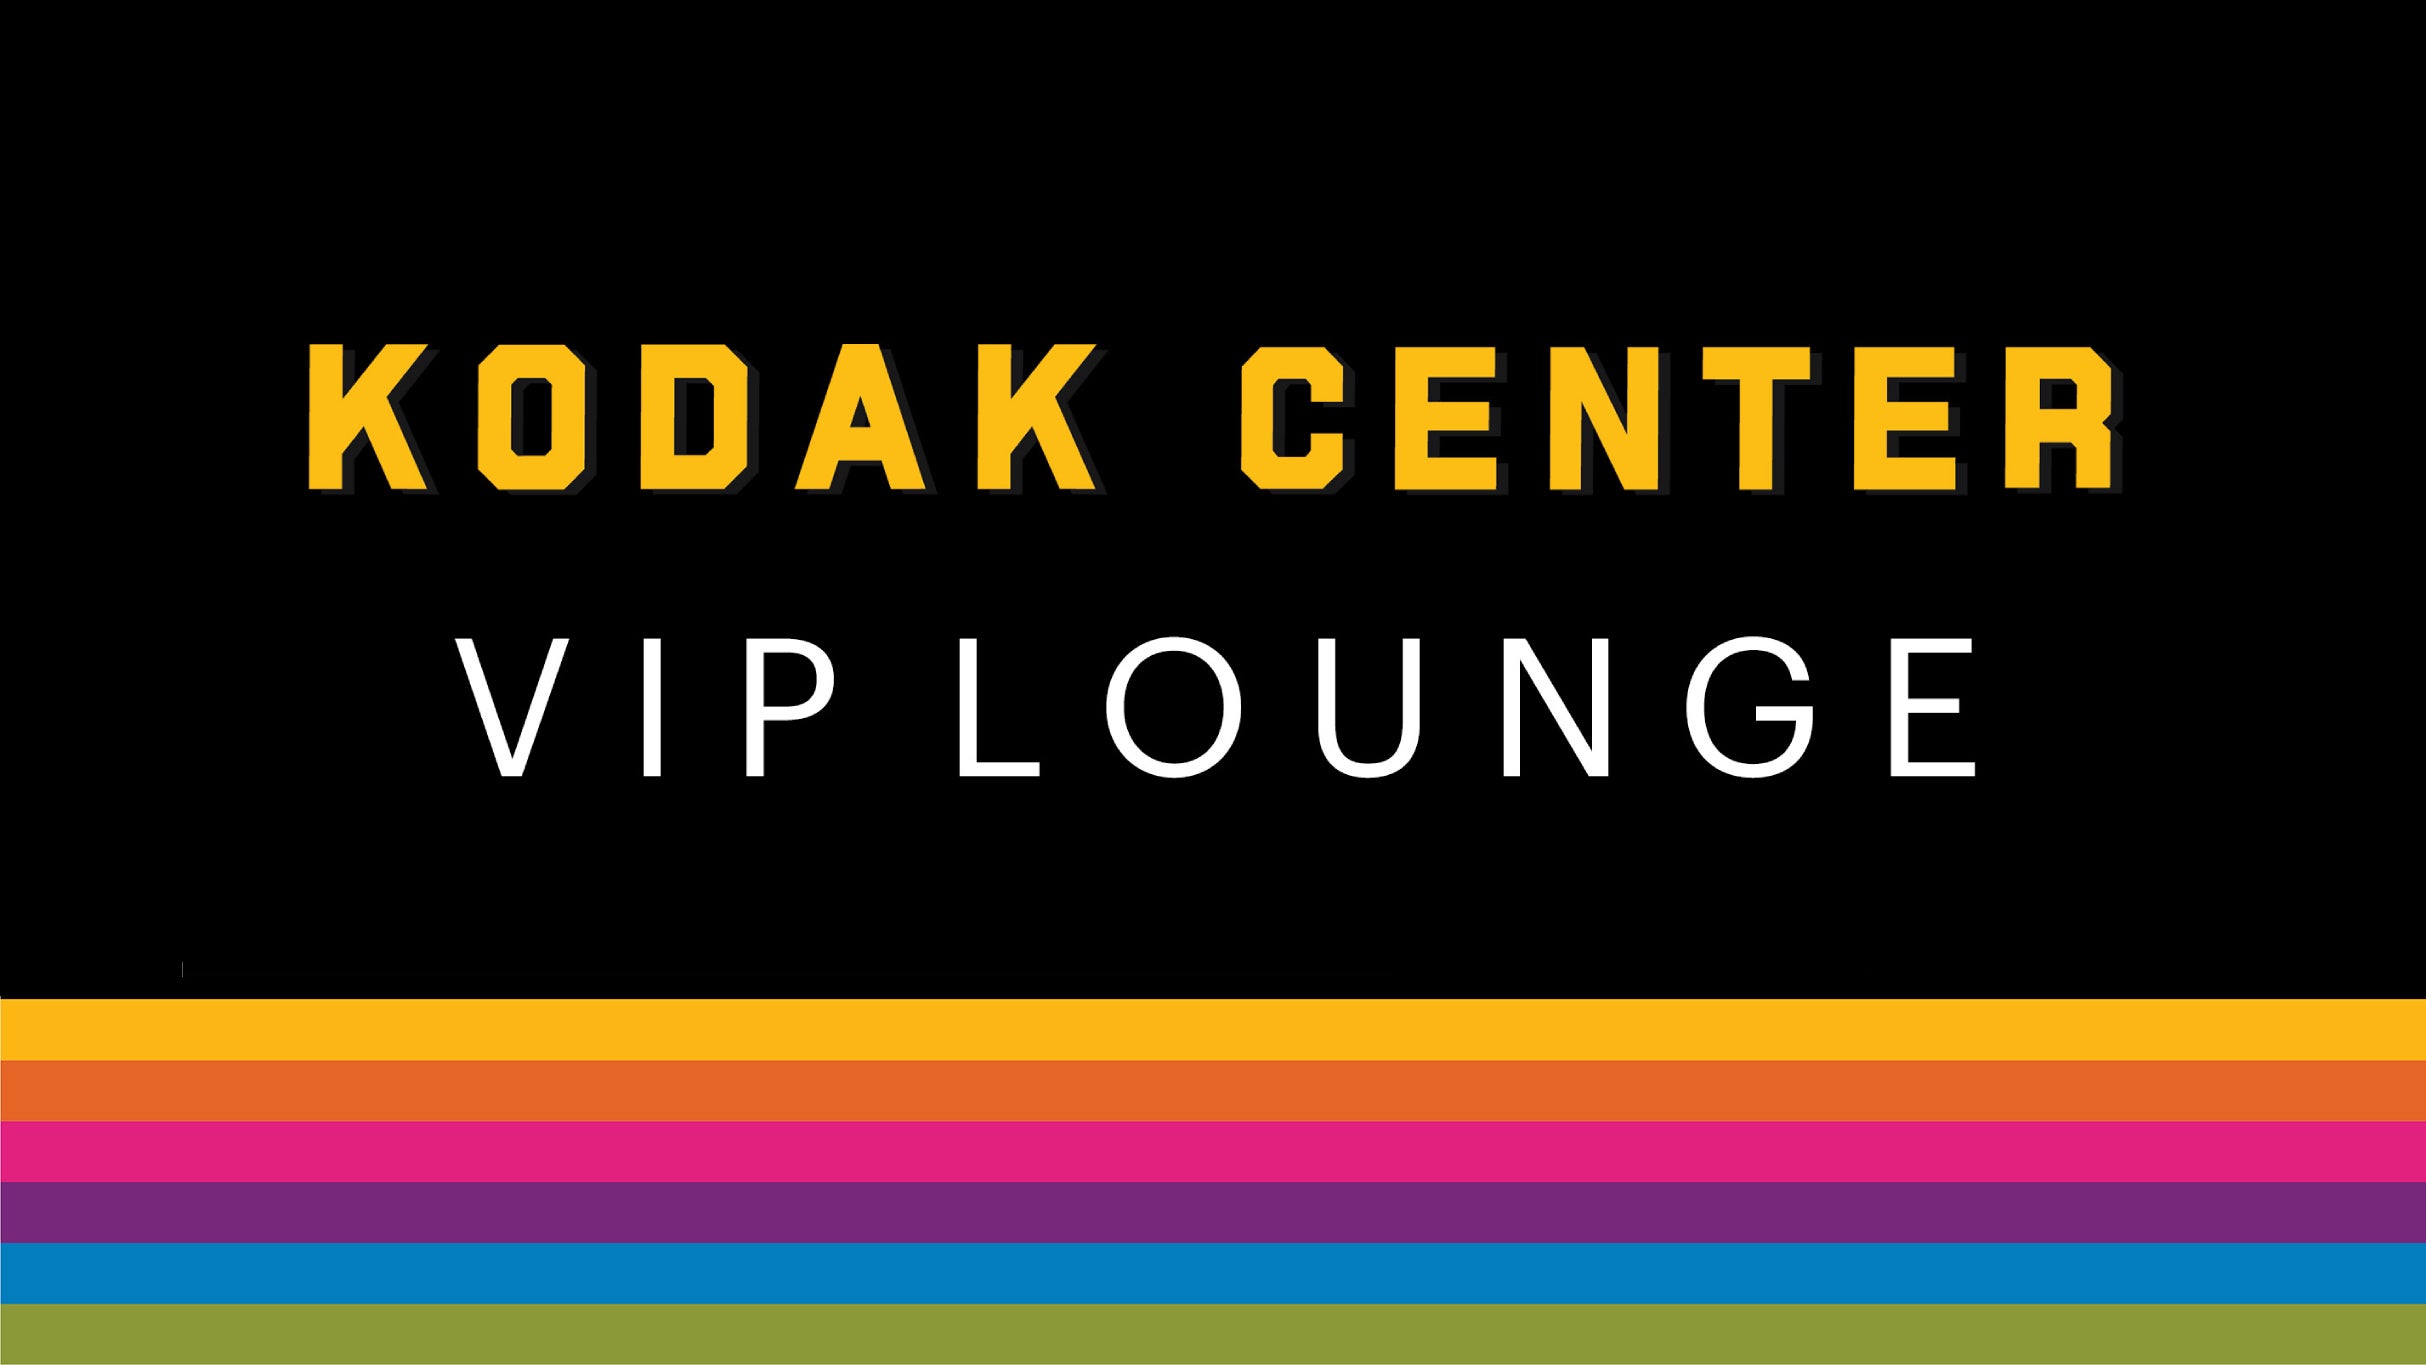 Kodak Center VIP Lounge presale information on freepresalepasswords.com